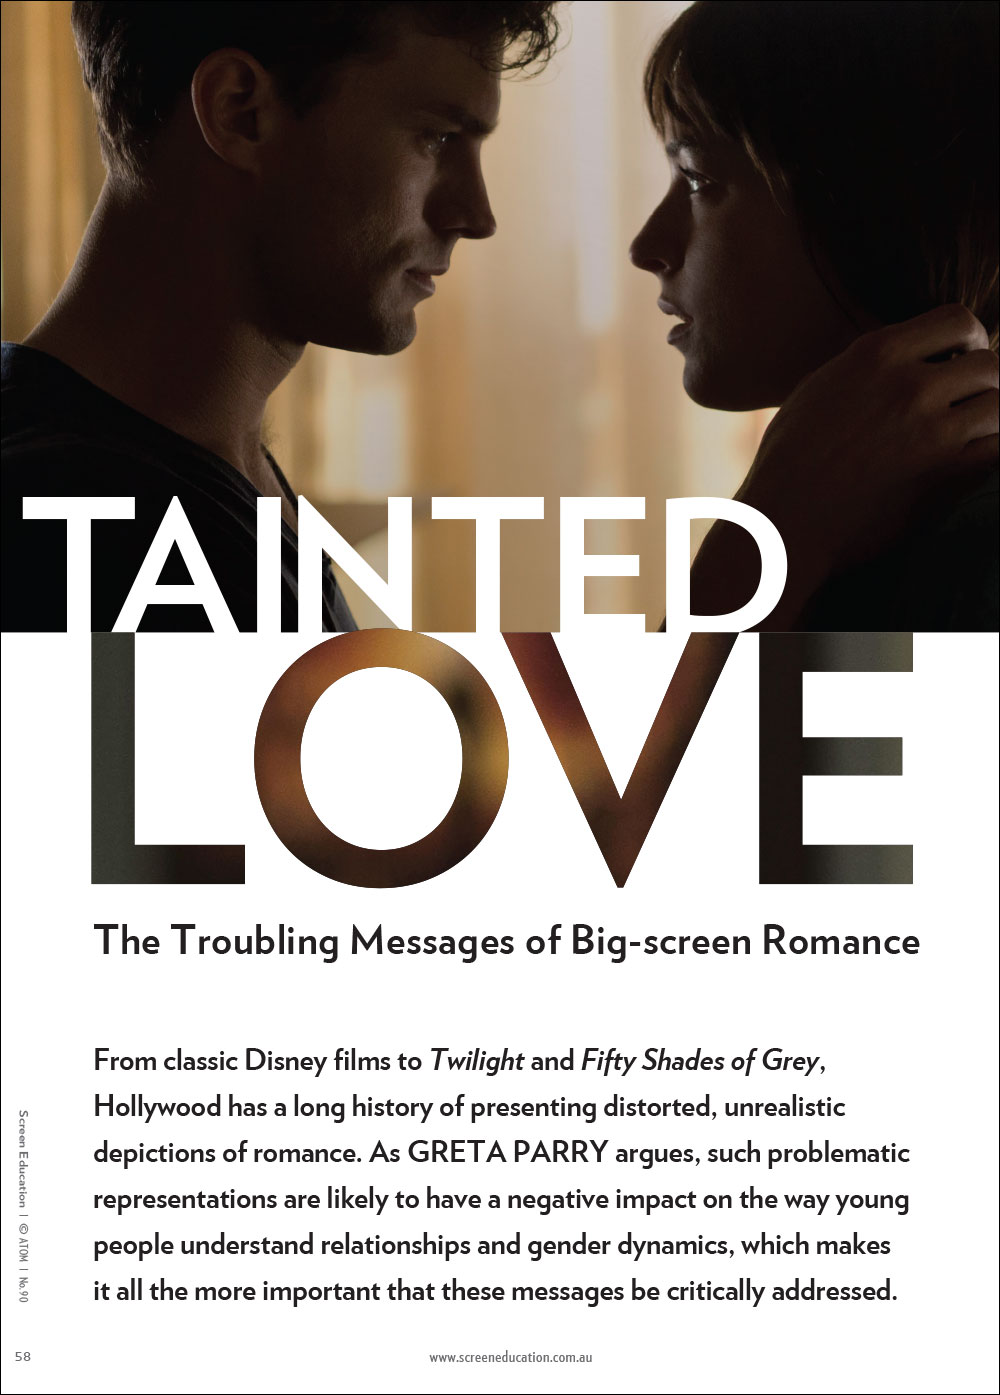 Tainted Love - Movie